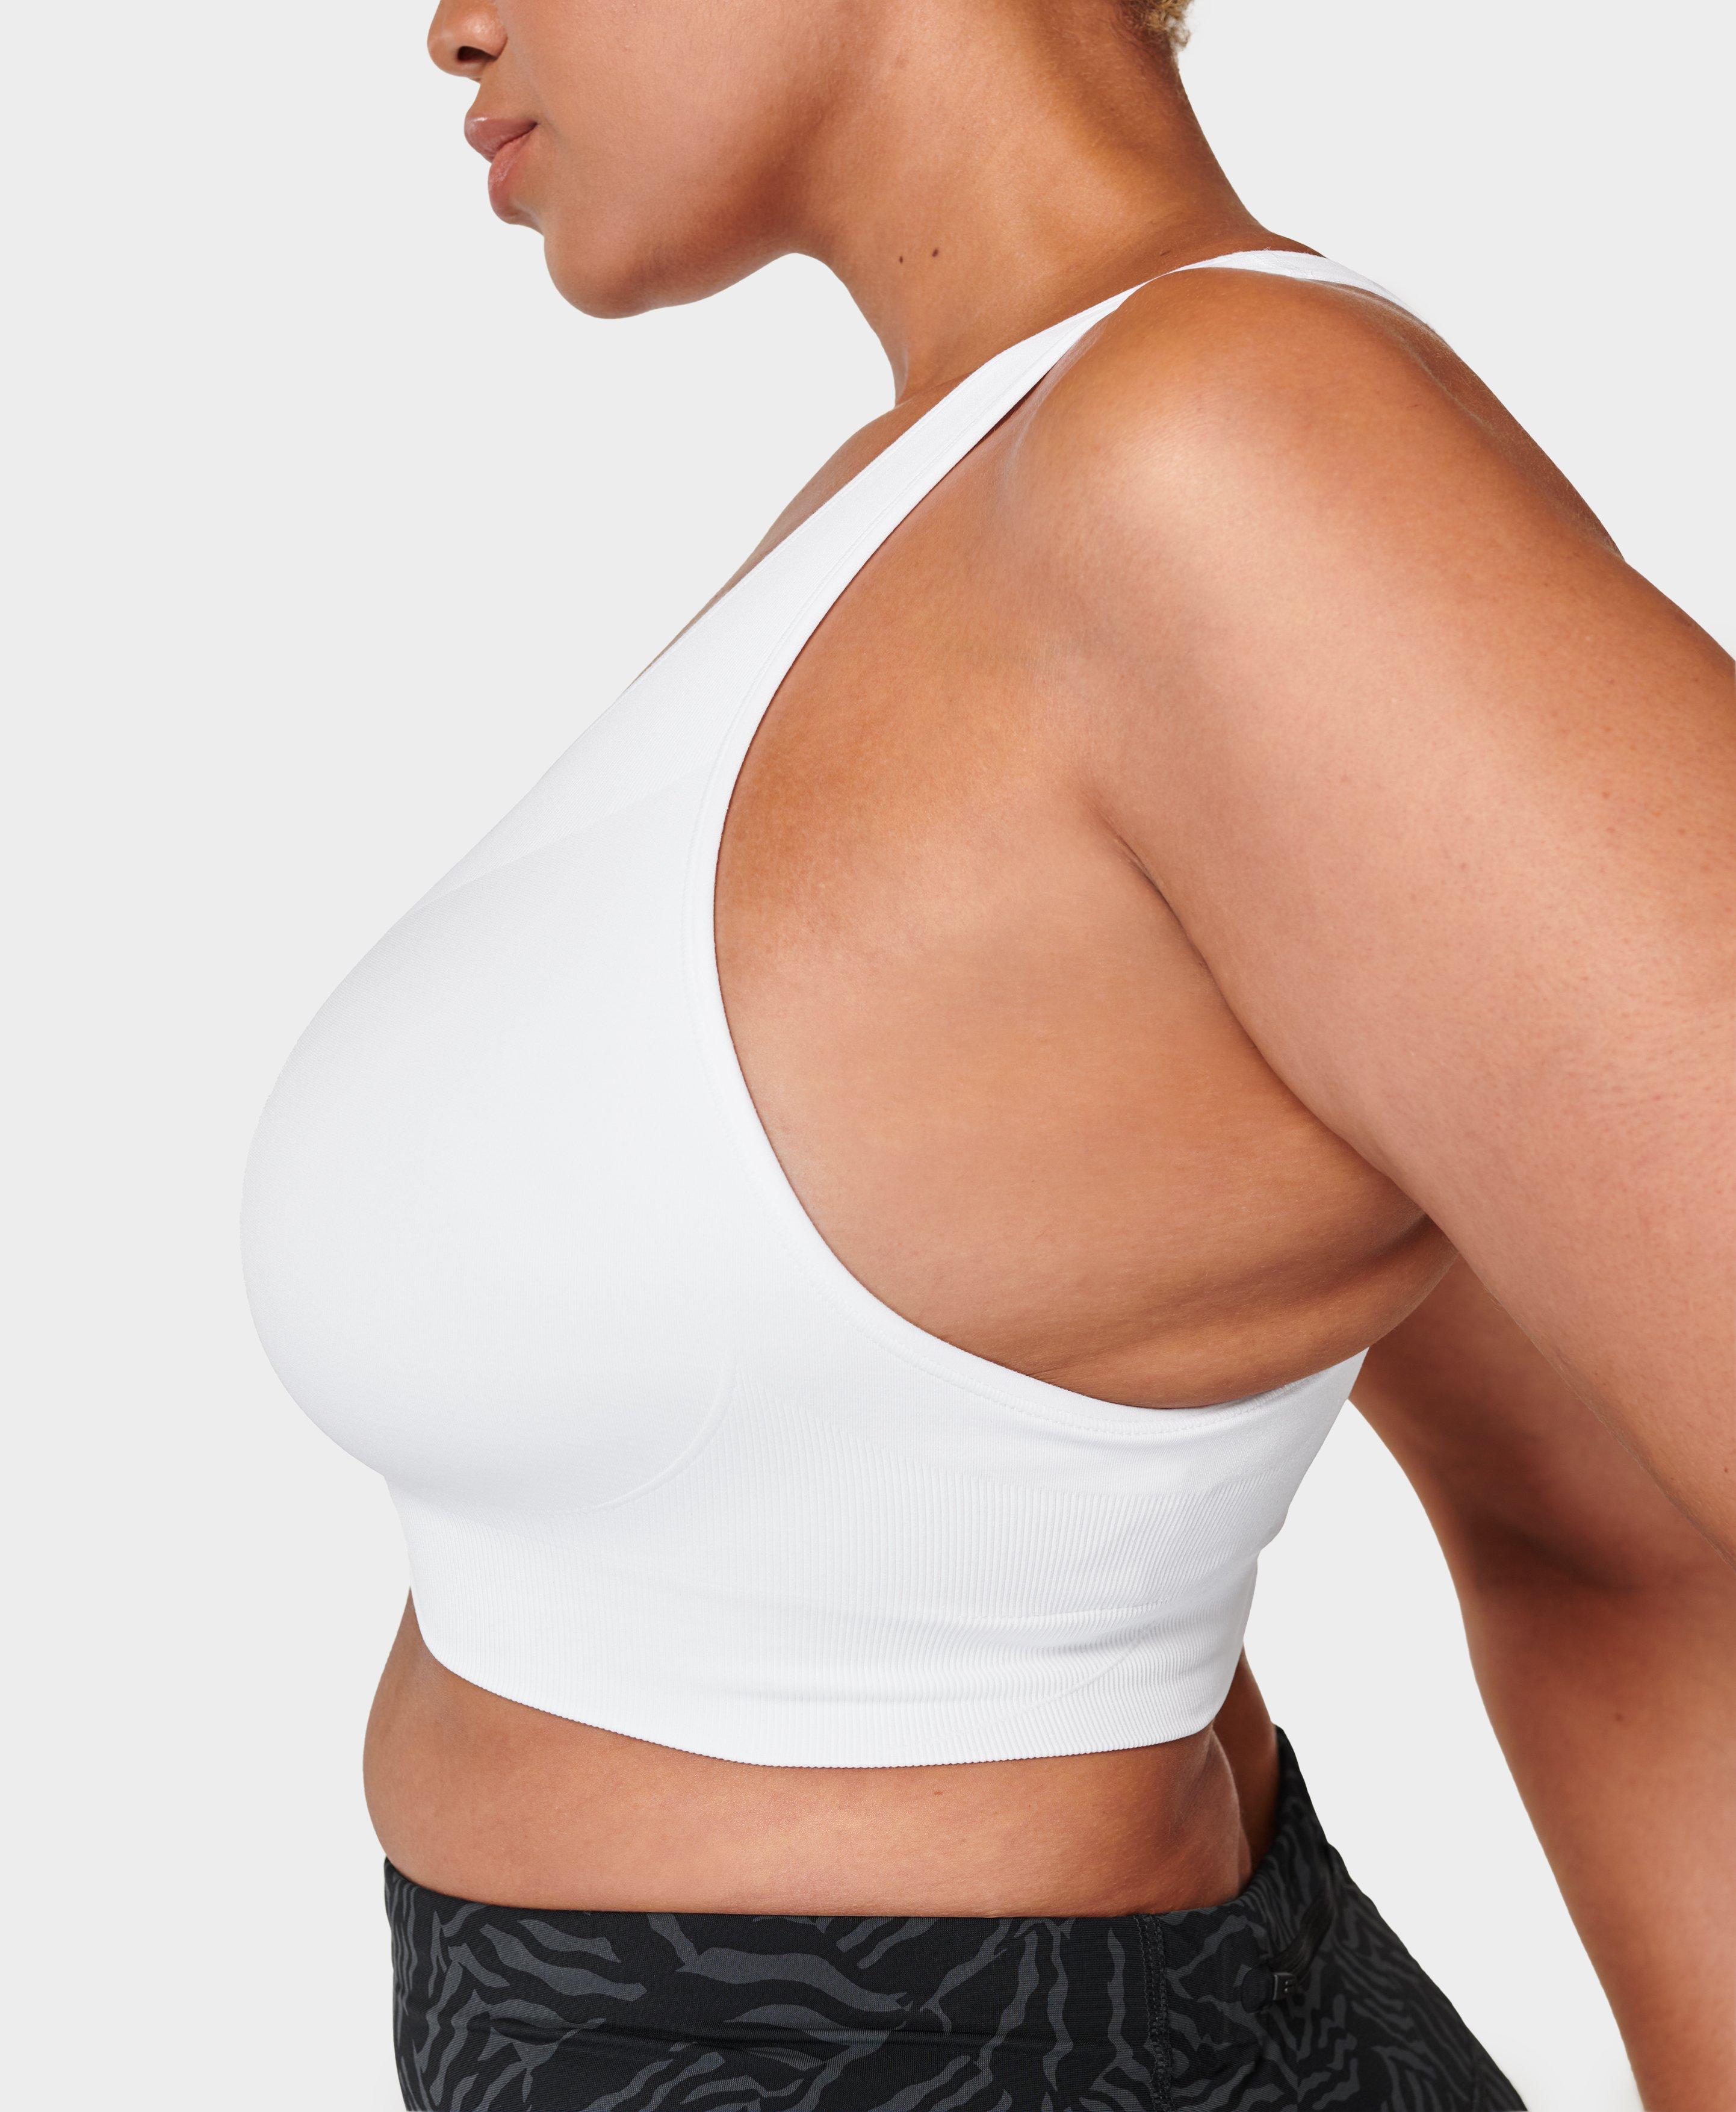 Vie Active Women's Chelsey White Sports Bra Size Small $58 Retail